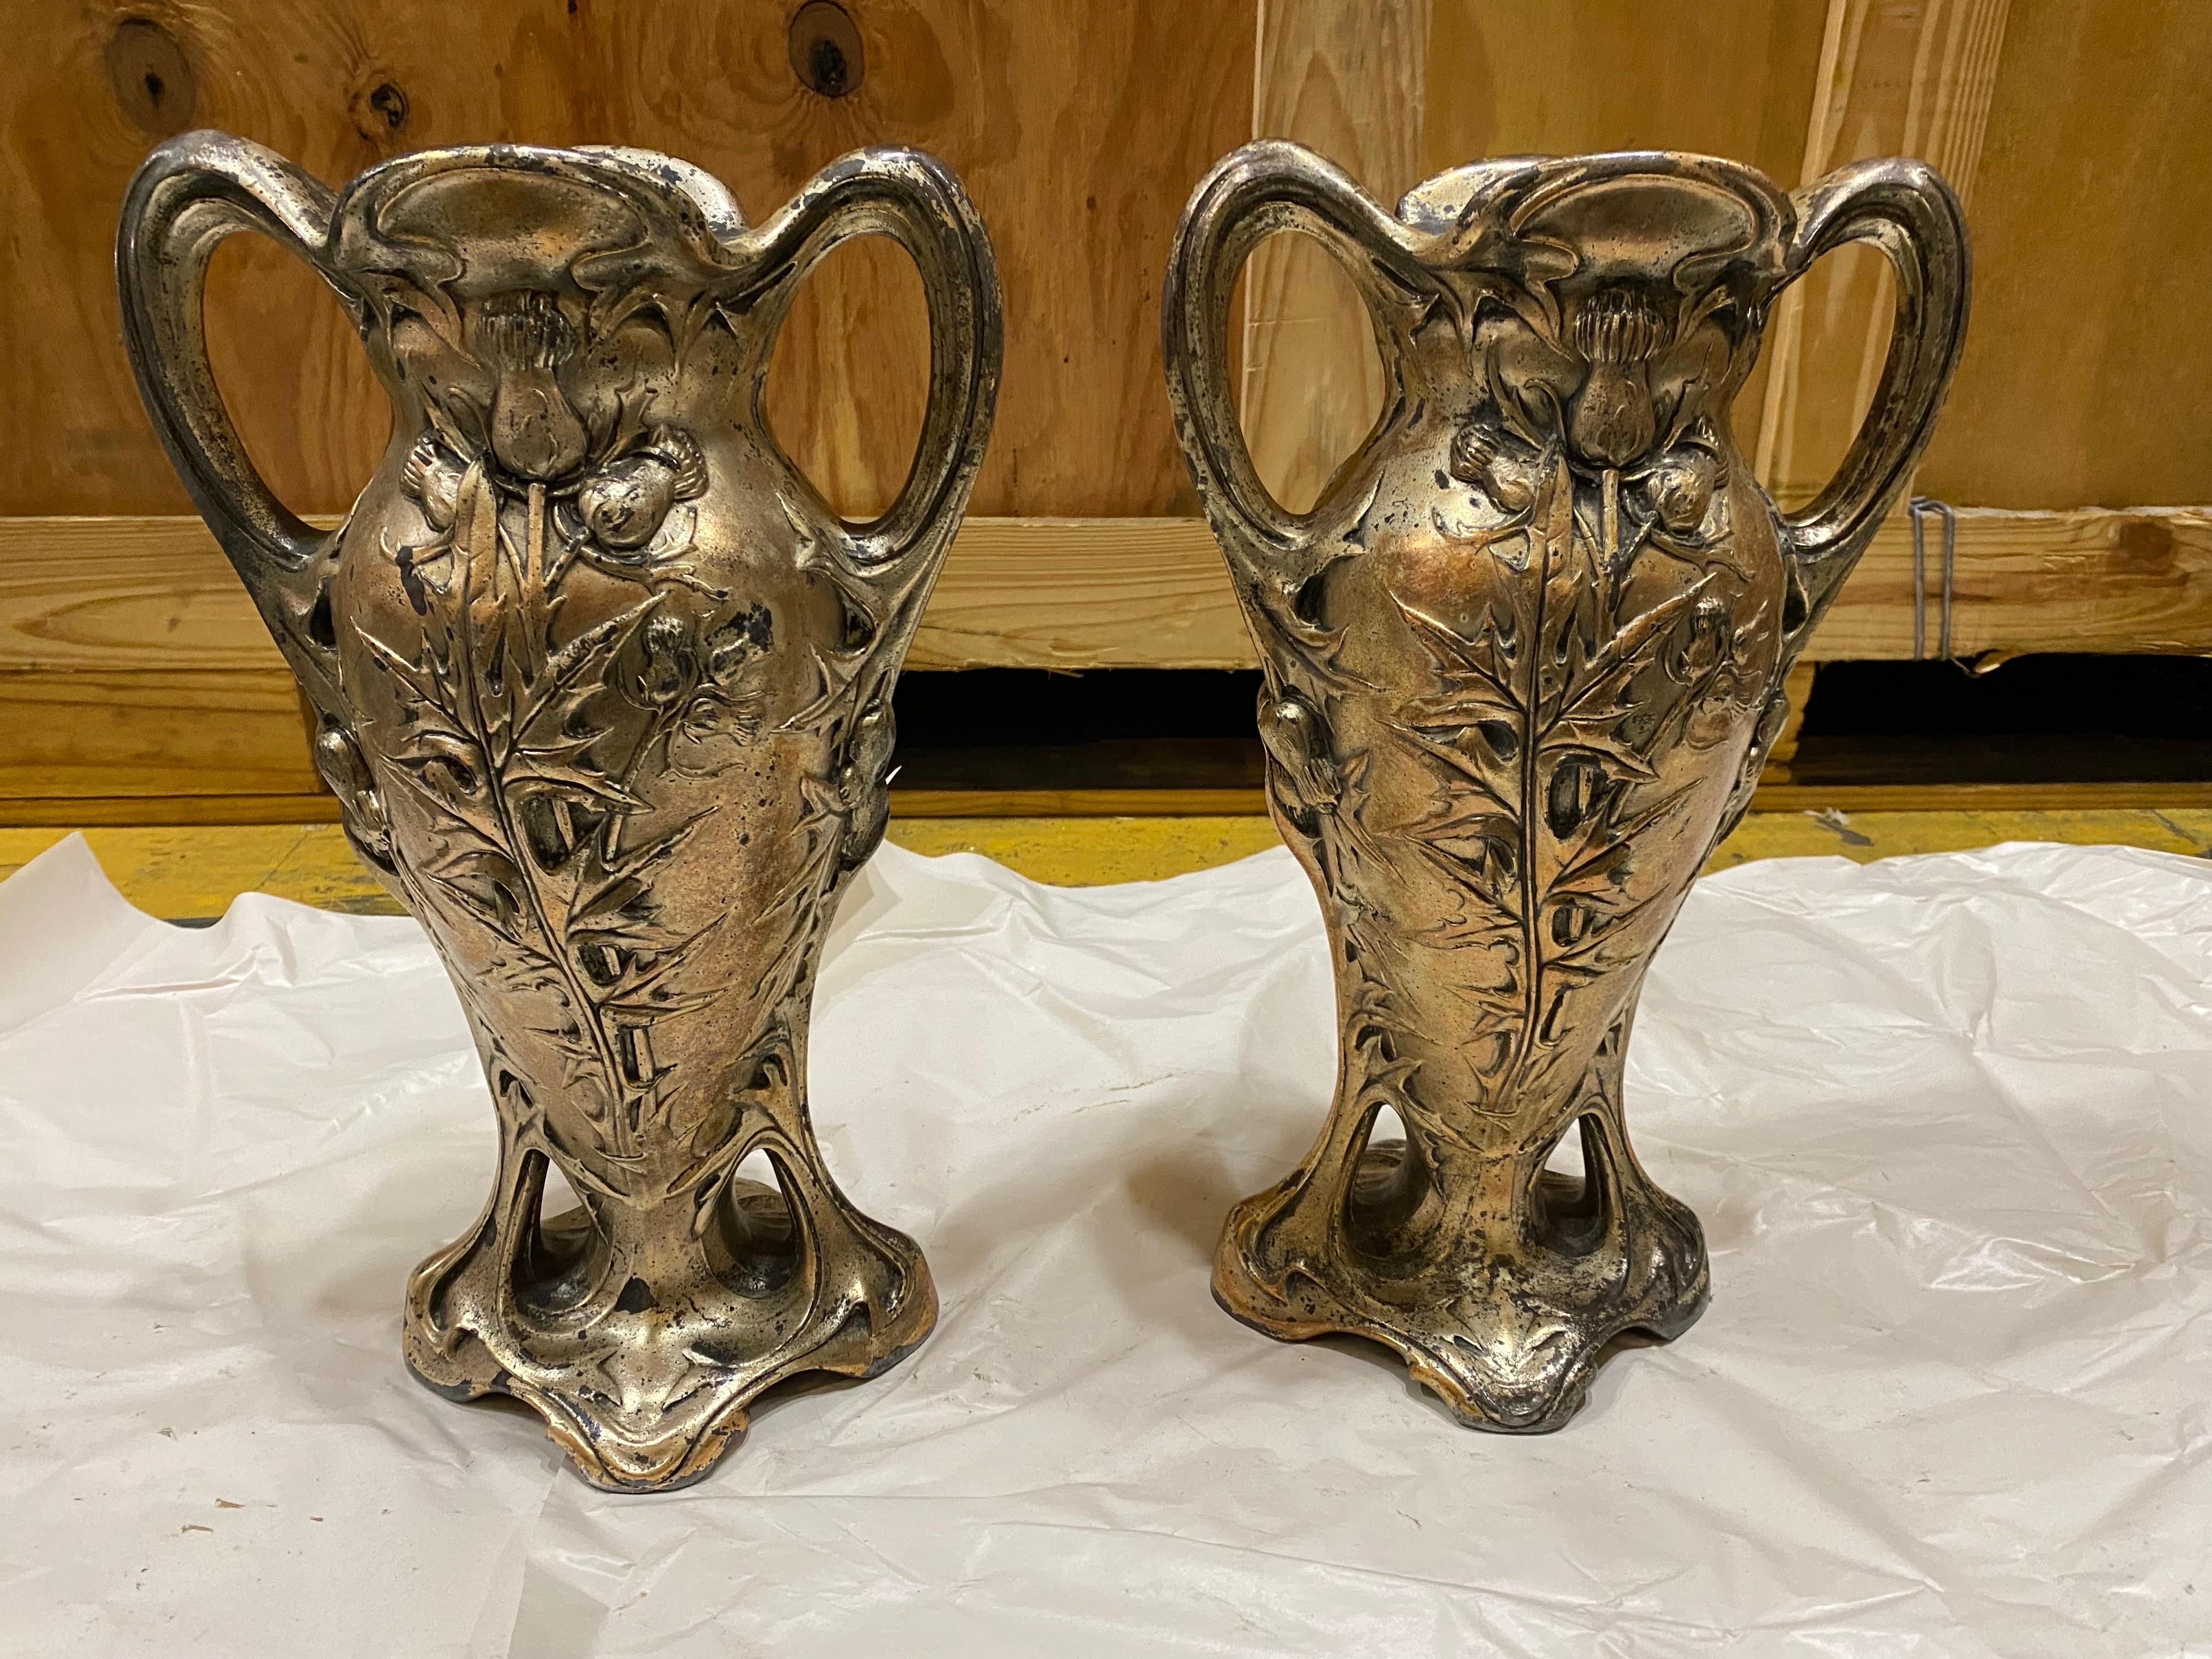 20th Century Pair of Art Nouveau Vases Iron Forged, by Dagobert Peche